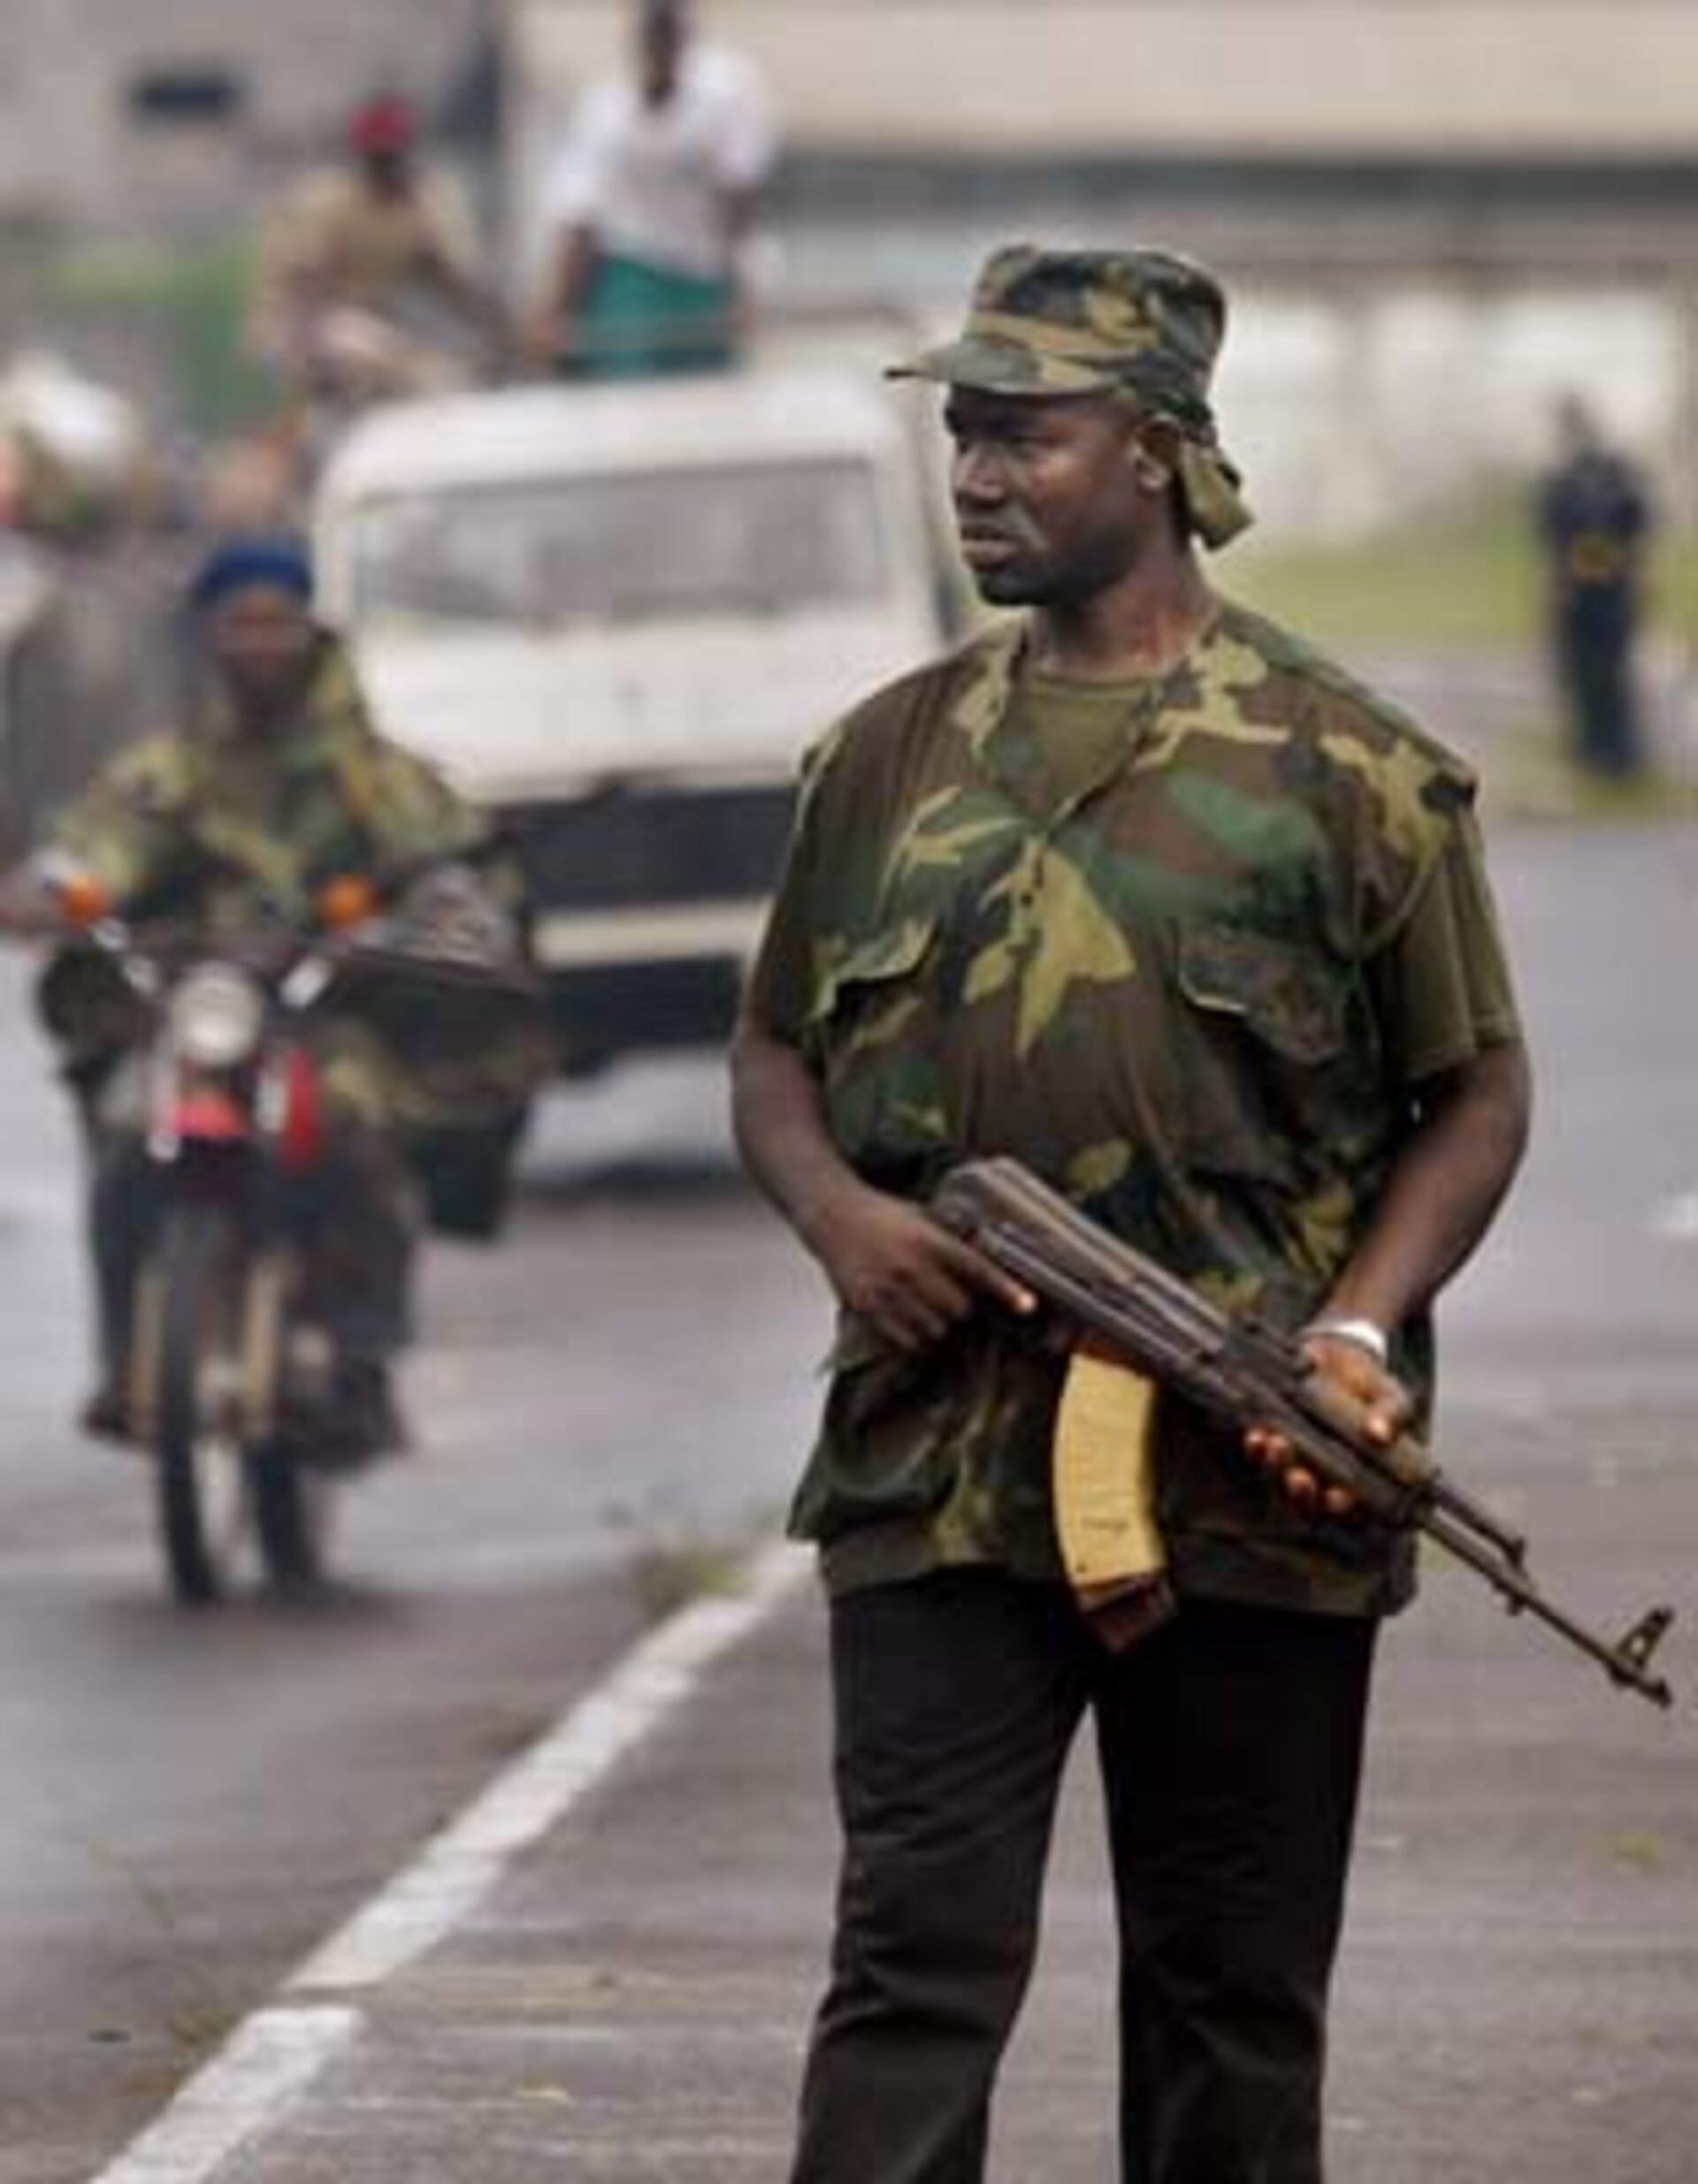 A government soldier on patrol in Monrovia, Liberia